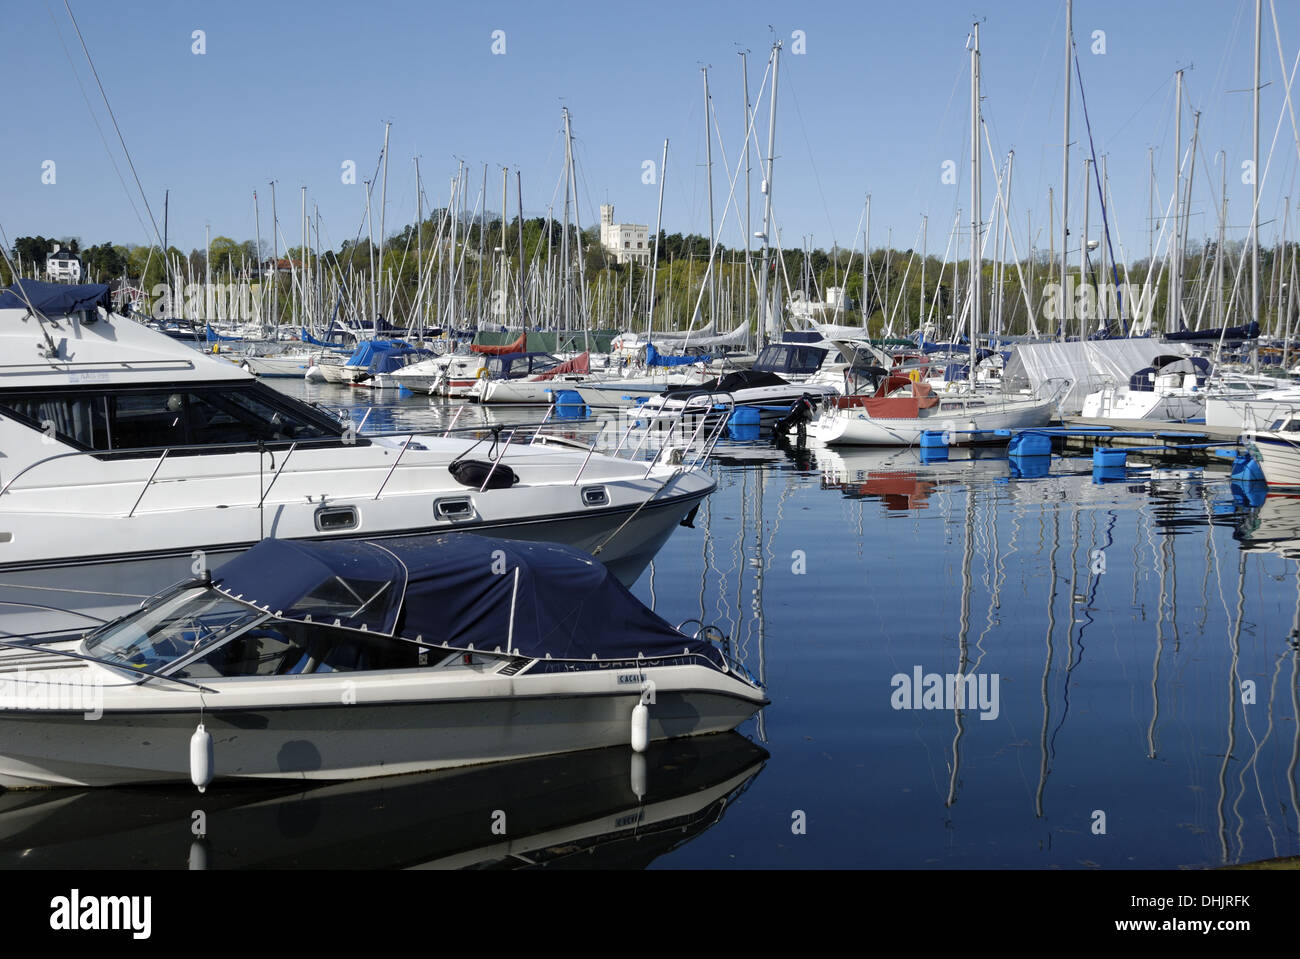 Kongen marina oslo hi-res stock photography and images - Alamy